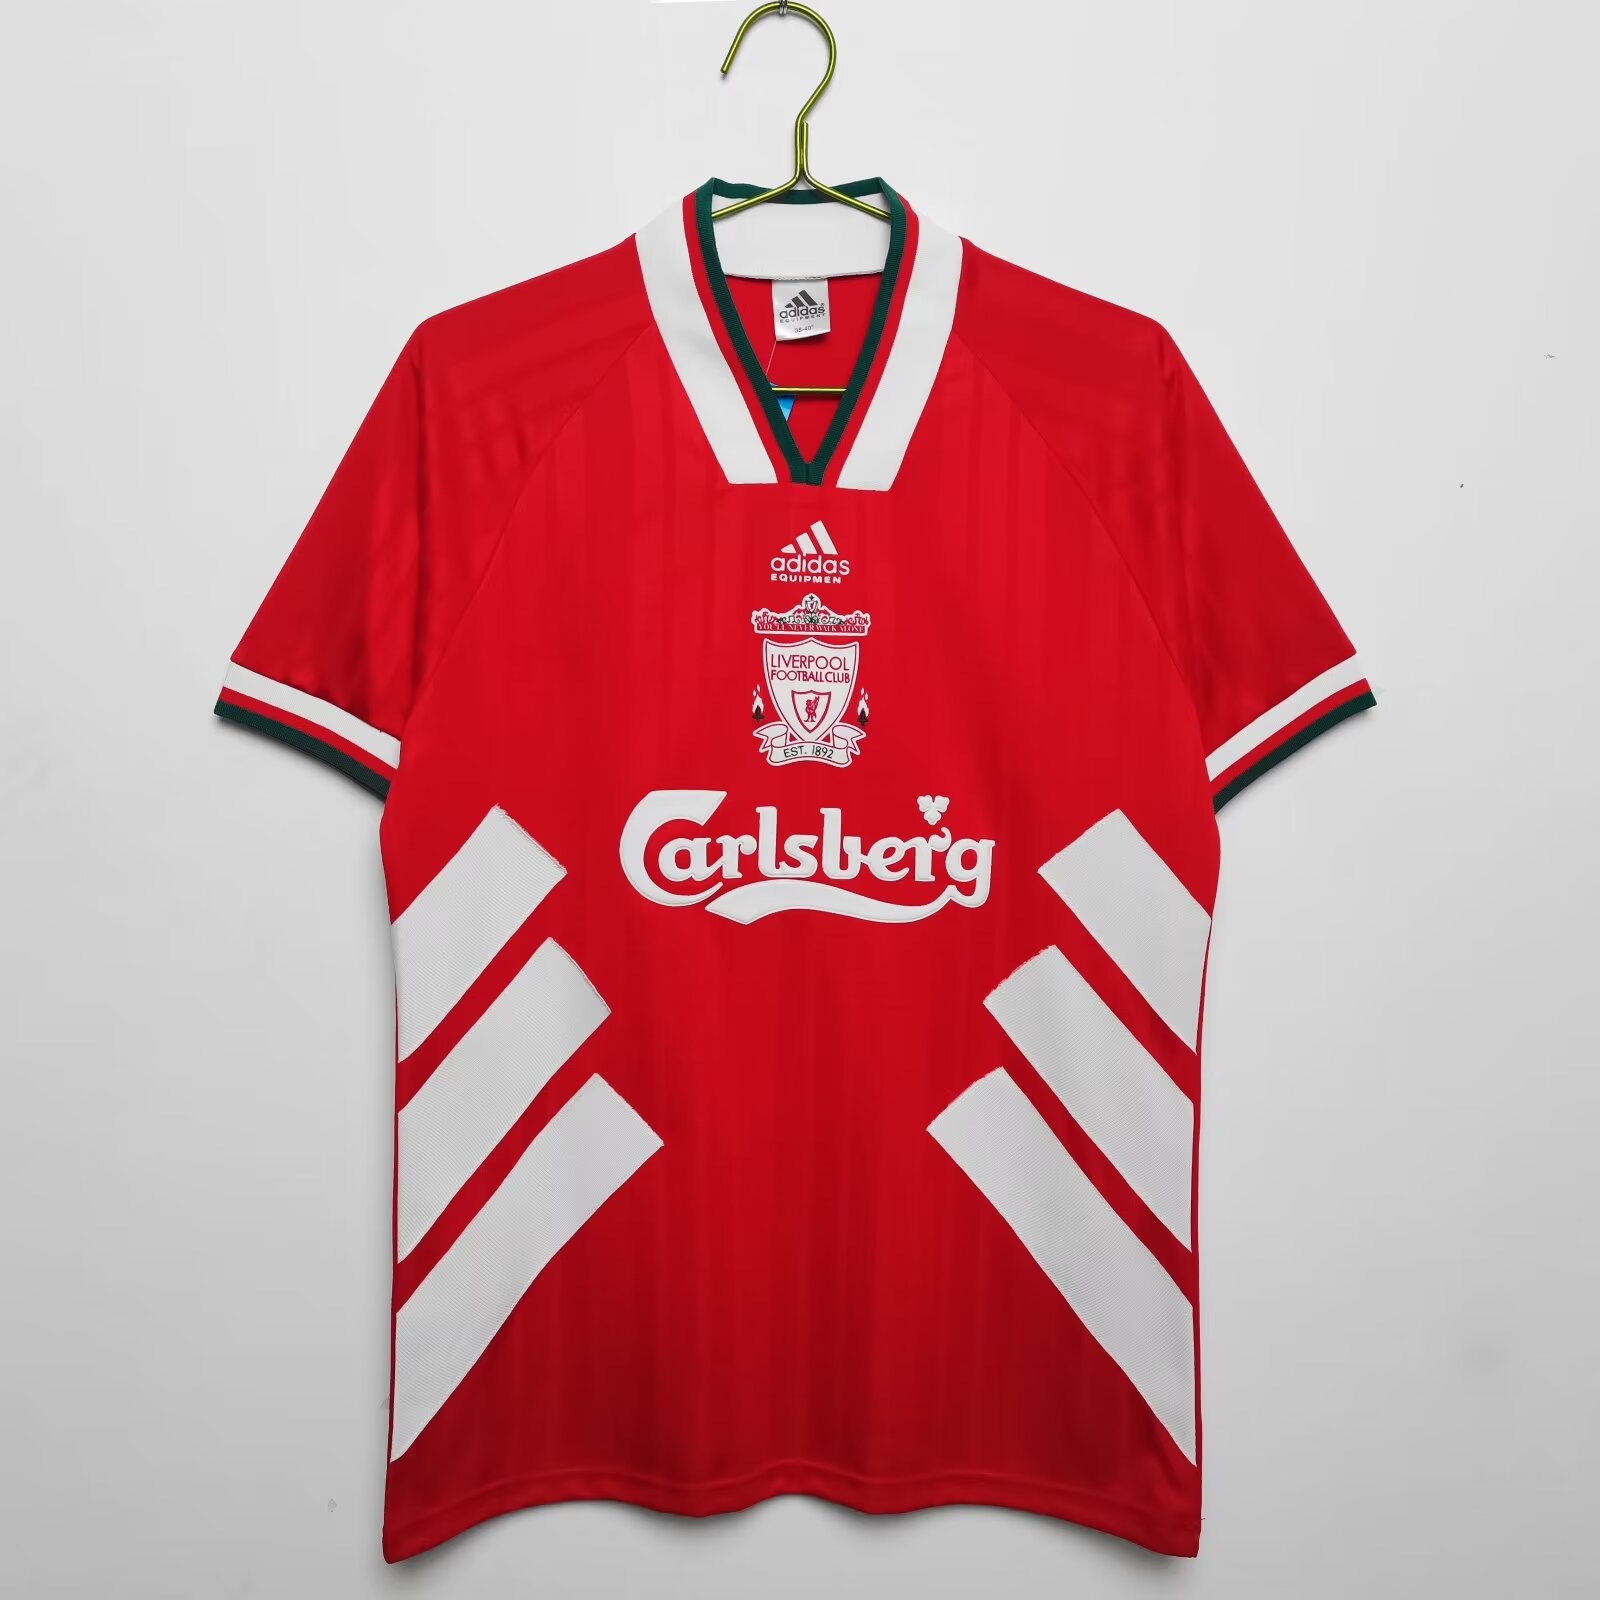  1993/95 Liverpool F.C. retro